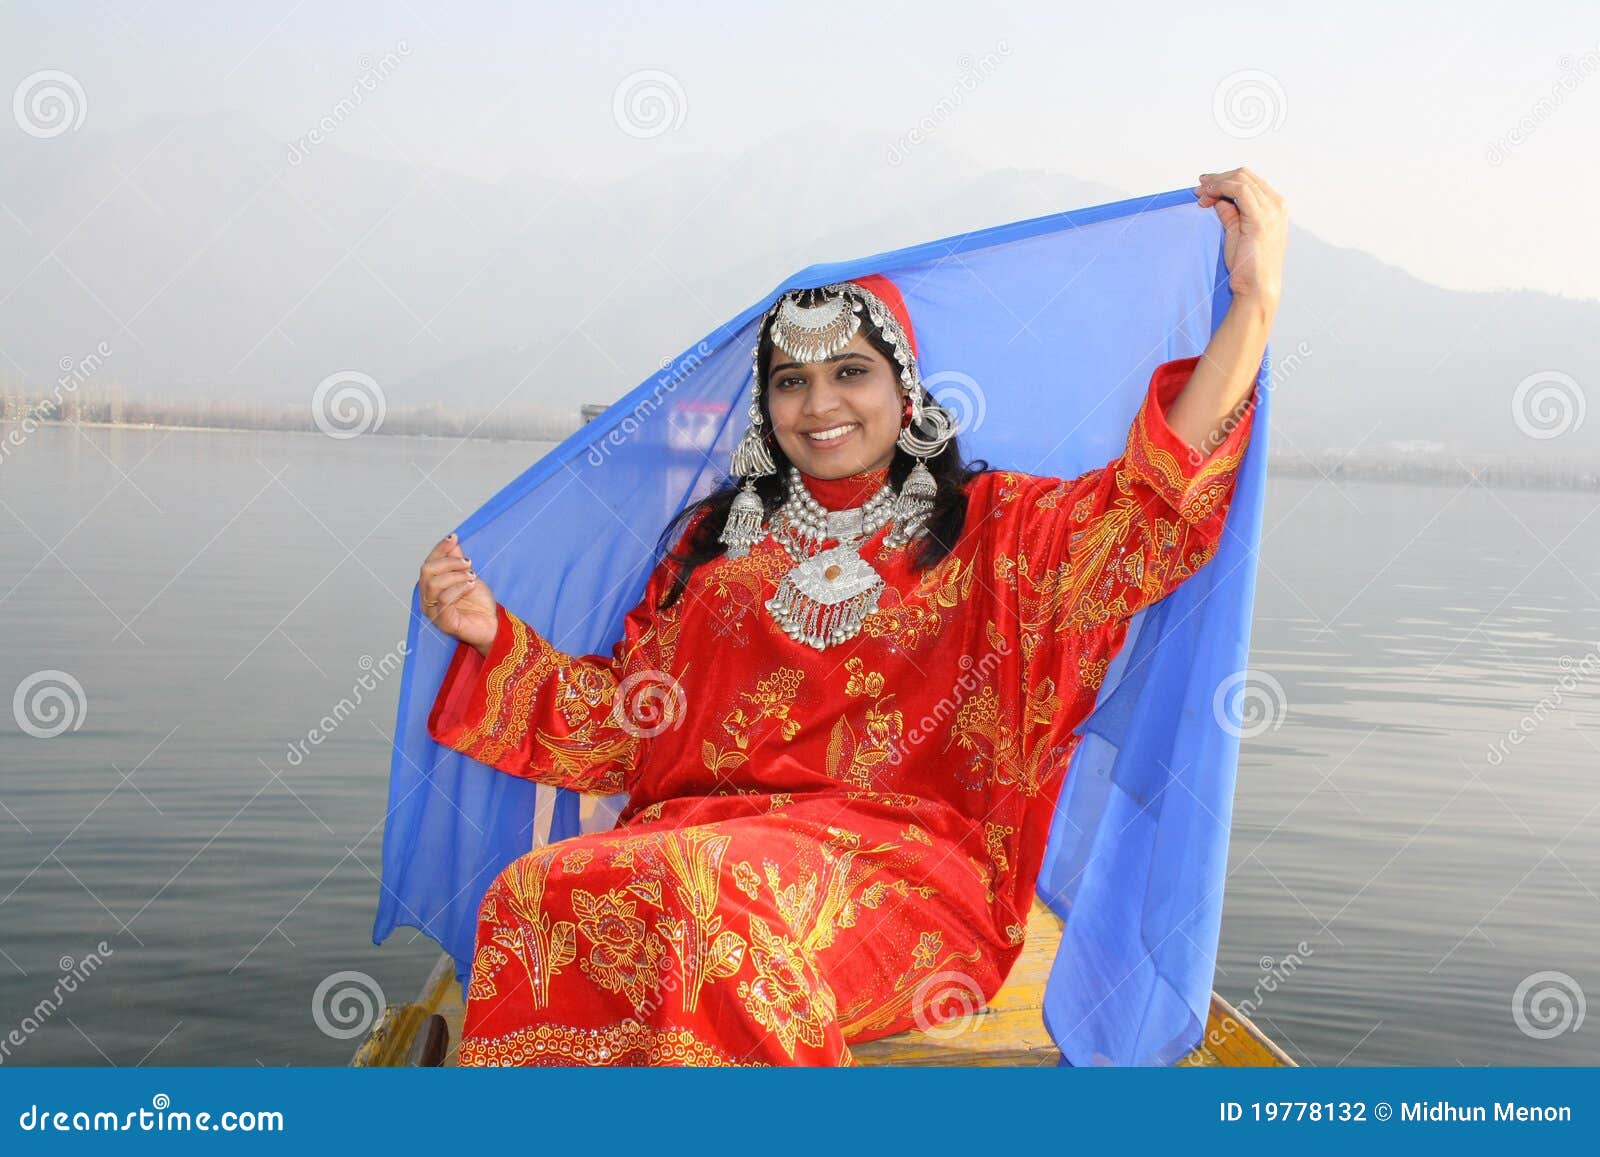 kashmiri girl lifting her blue veil